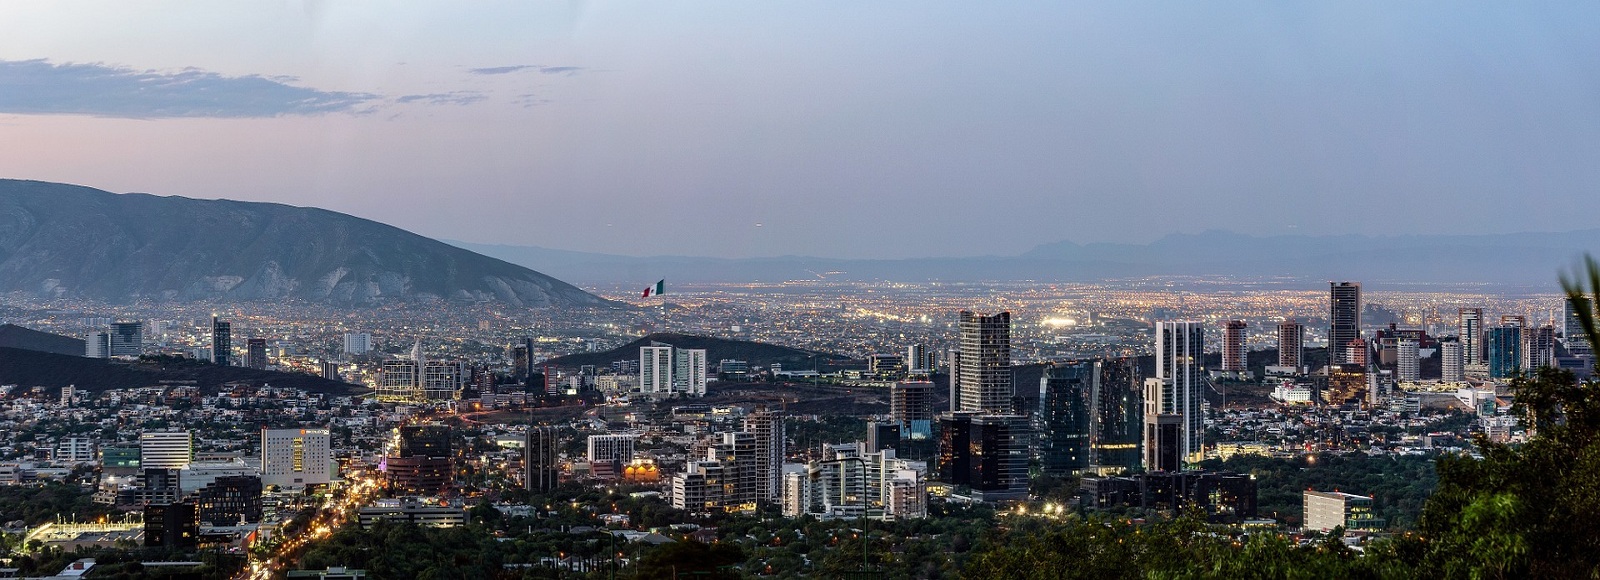 Transfer Offers in Monterrey. Low Cost Transfers in  Monterrey 